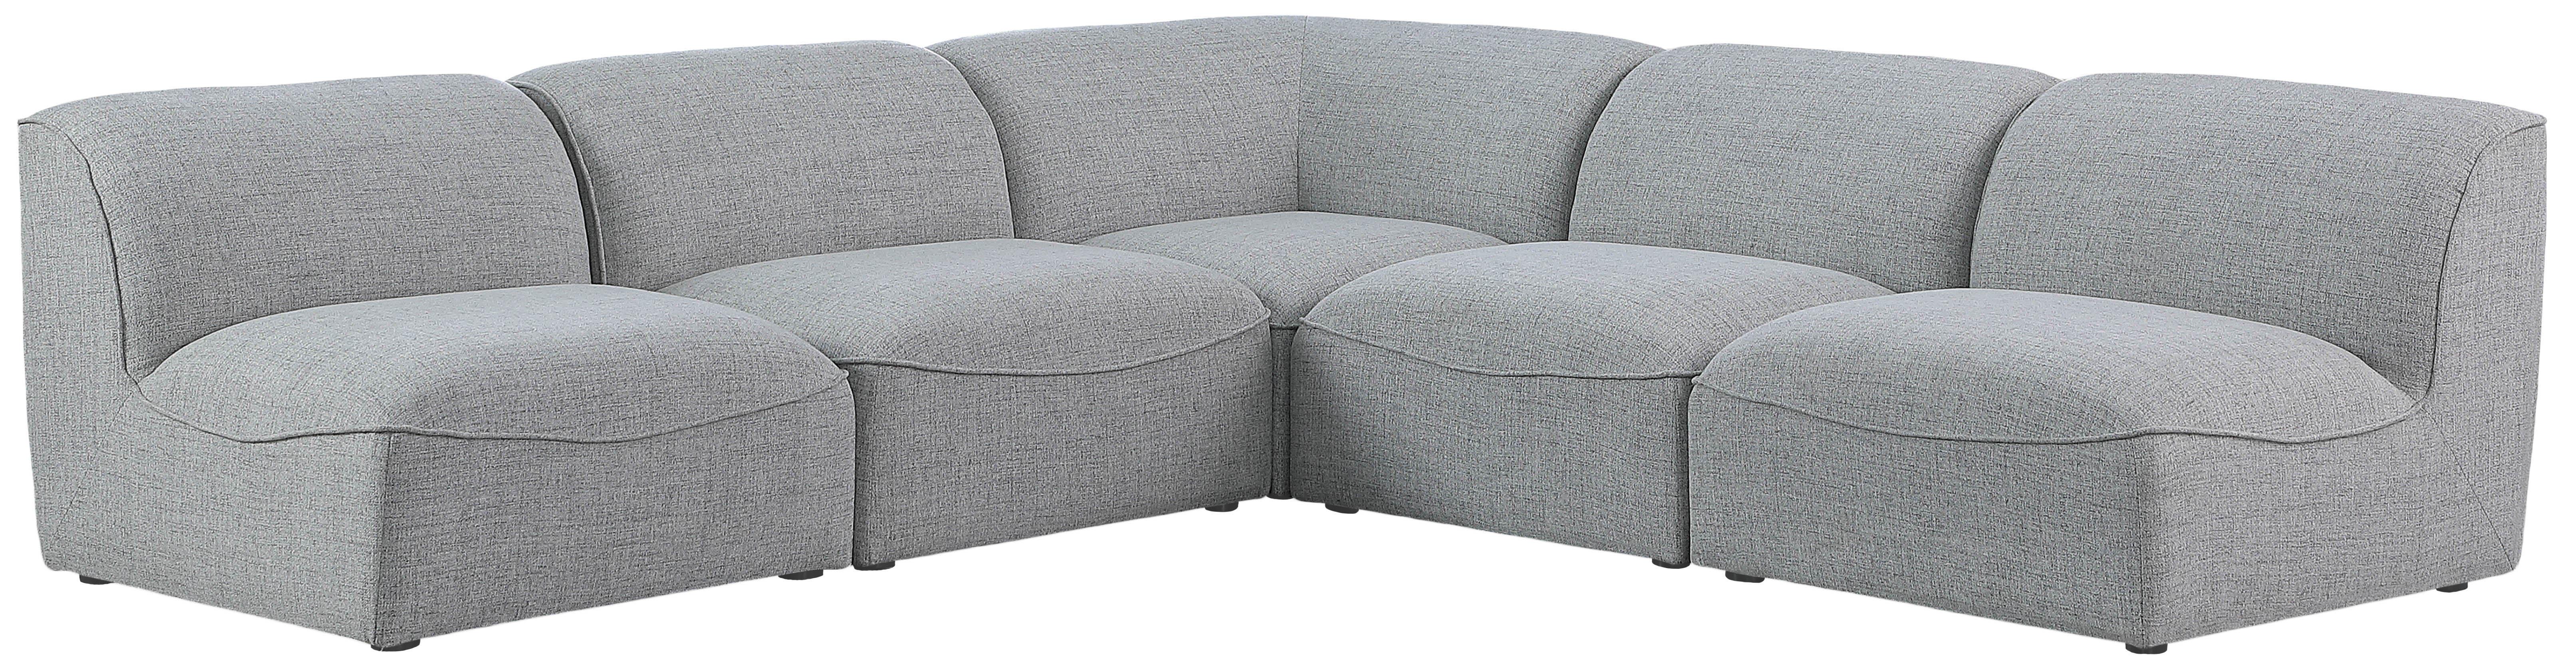 Meridian Furniture - Miramar - Modular Sectional 5 Piece - Gray - Fabric - 5th Avenue Furniture